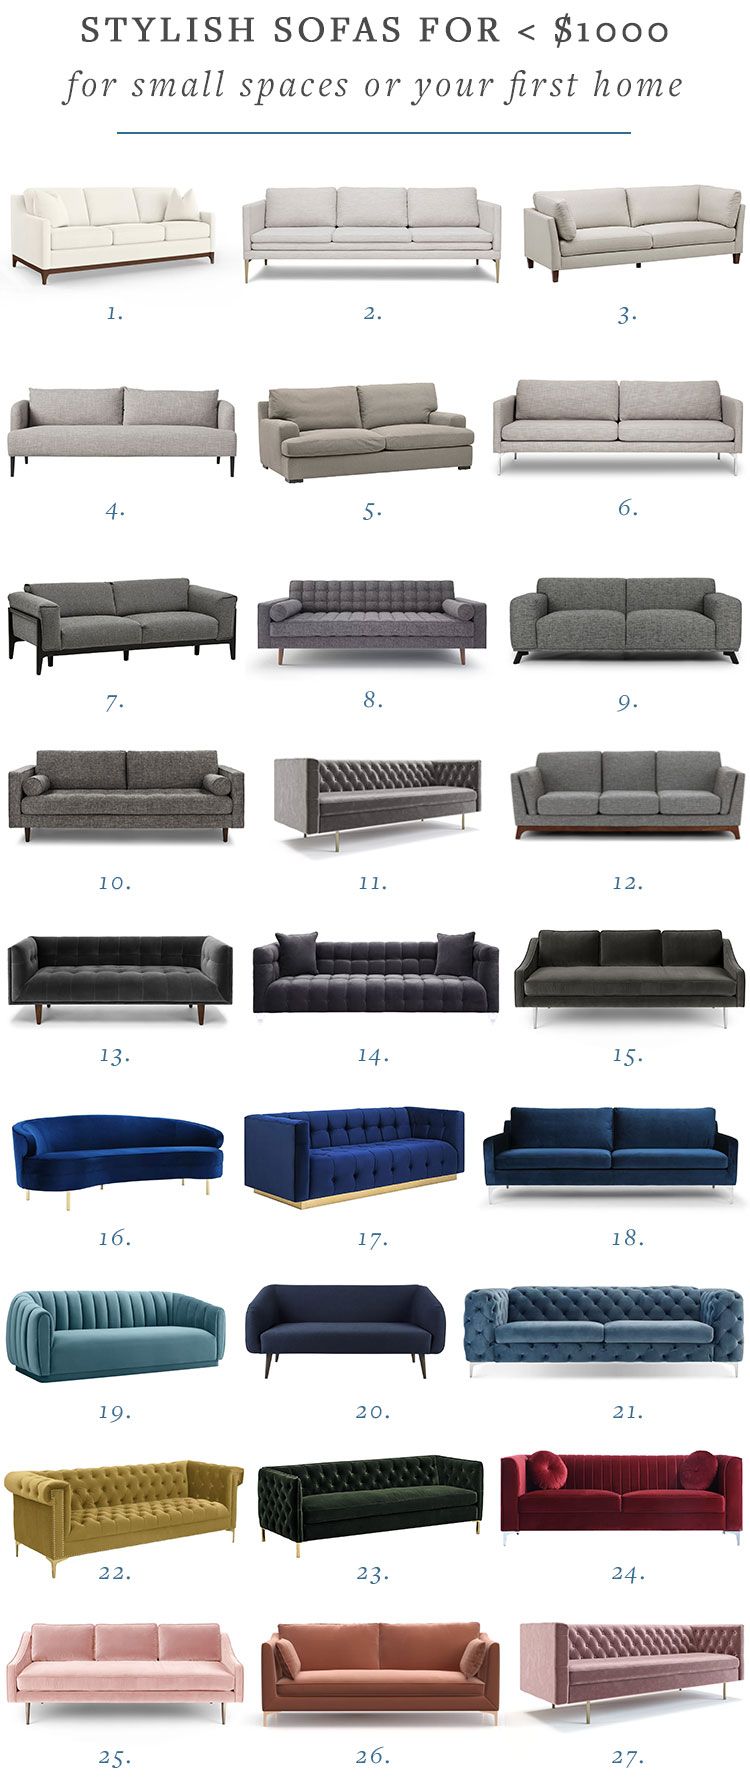 Stylish Sofas for under $1000